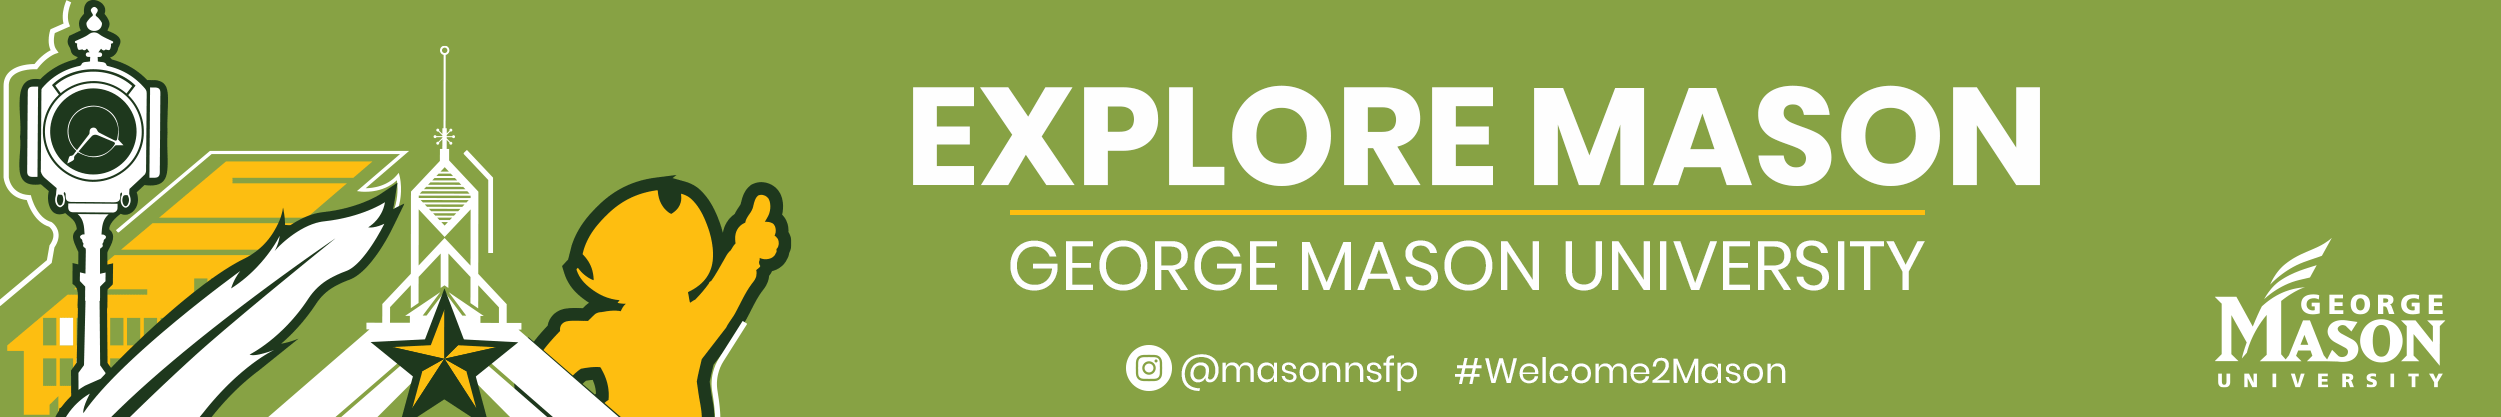 Explore Mason Header